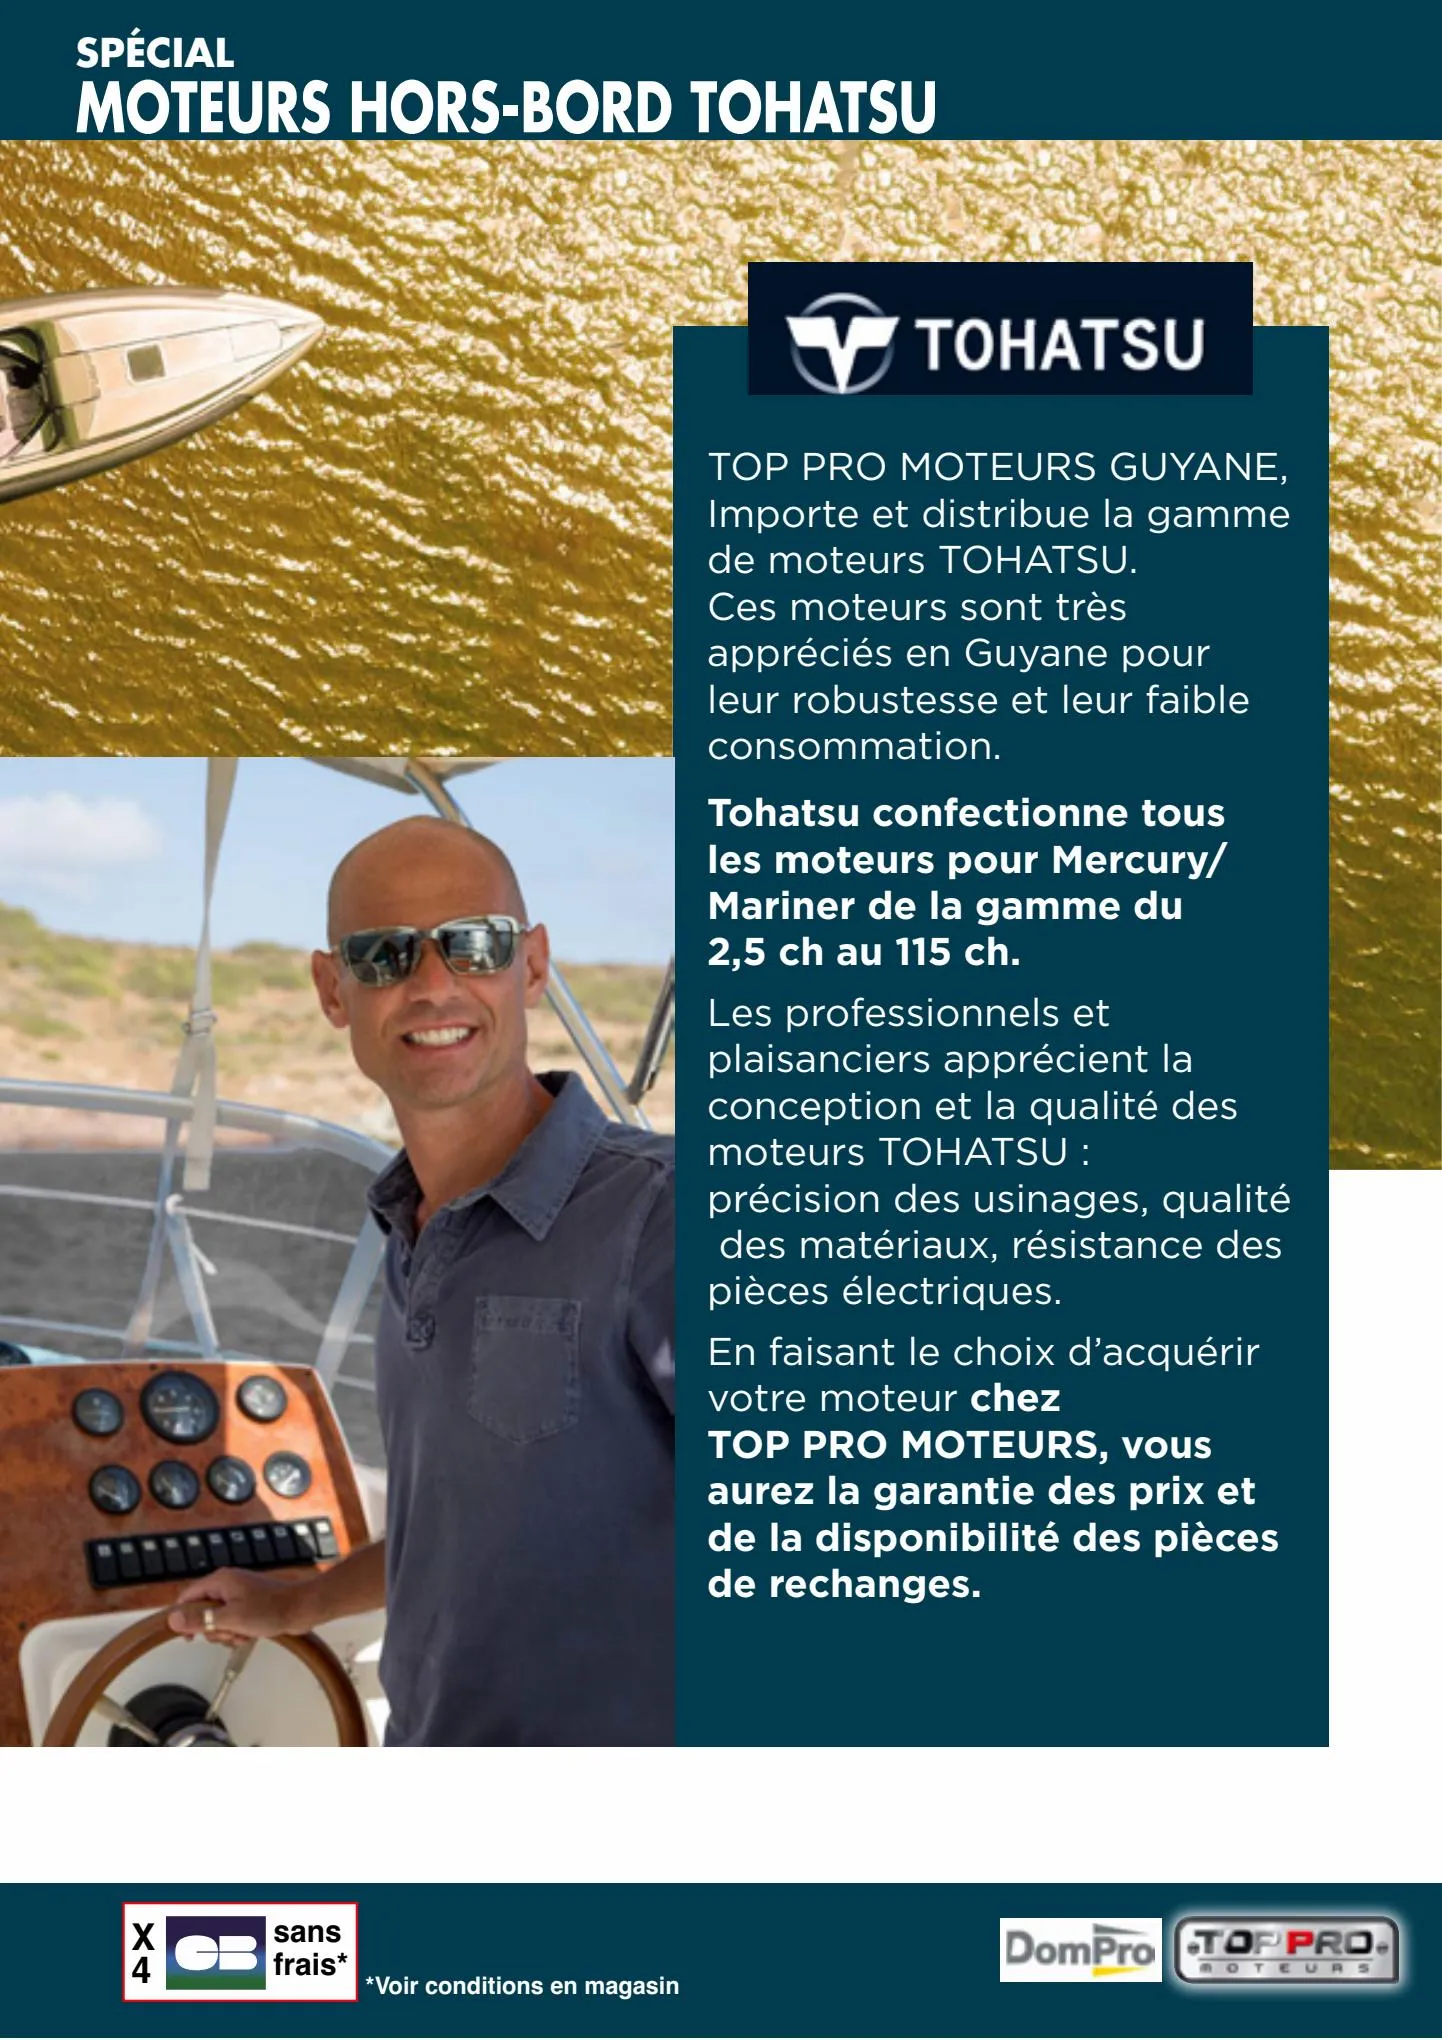 Catalogue Catalogue Moteurs Hord bord Tohastu_Top Pro Moteurs - Dom Pro Guyane, page 00002